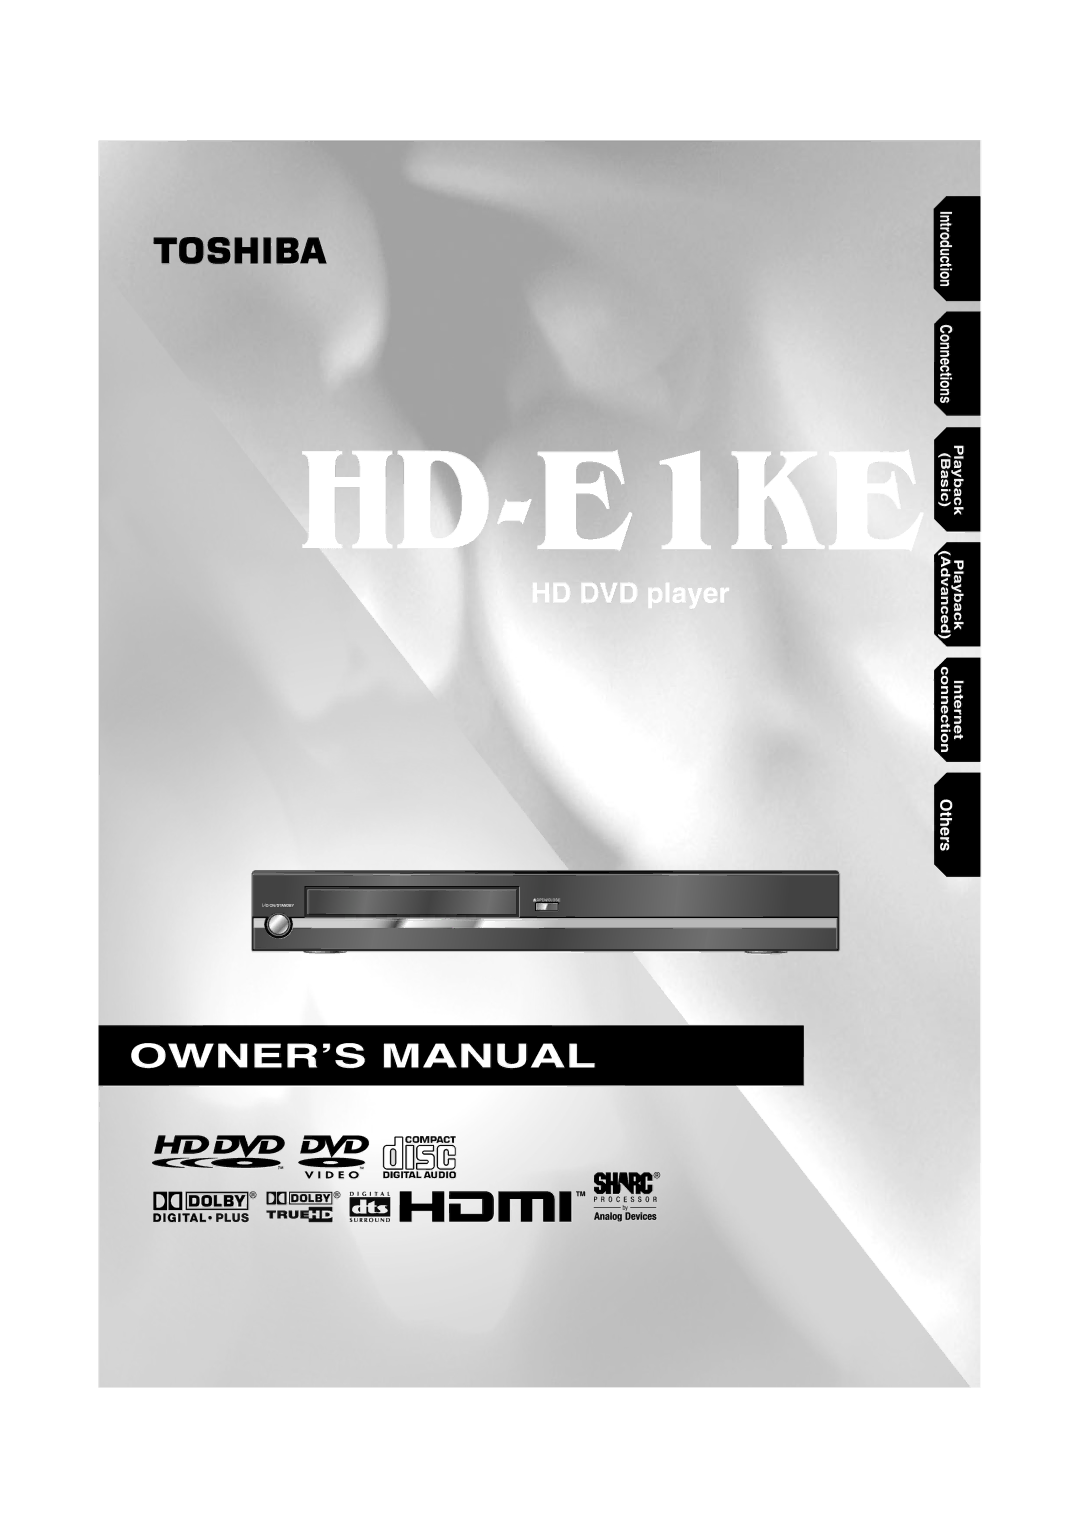 Toshiba HD-E1KE manual HD DVD player 